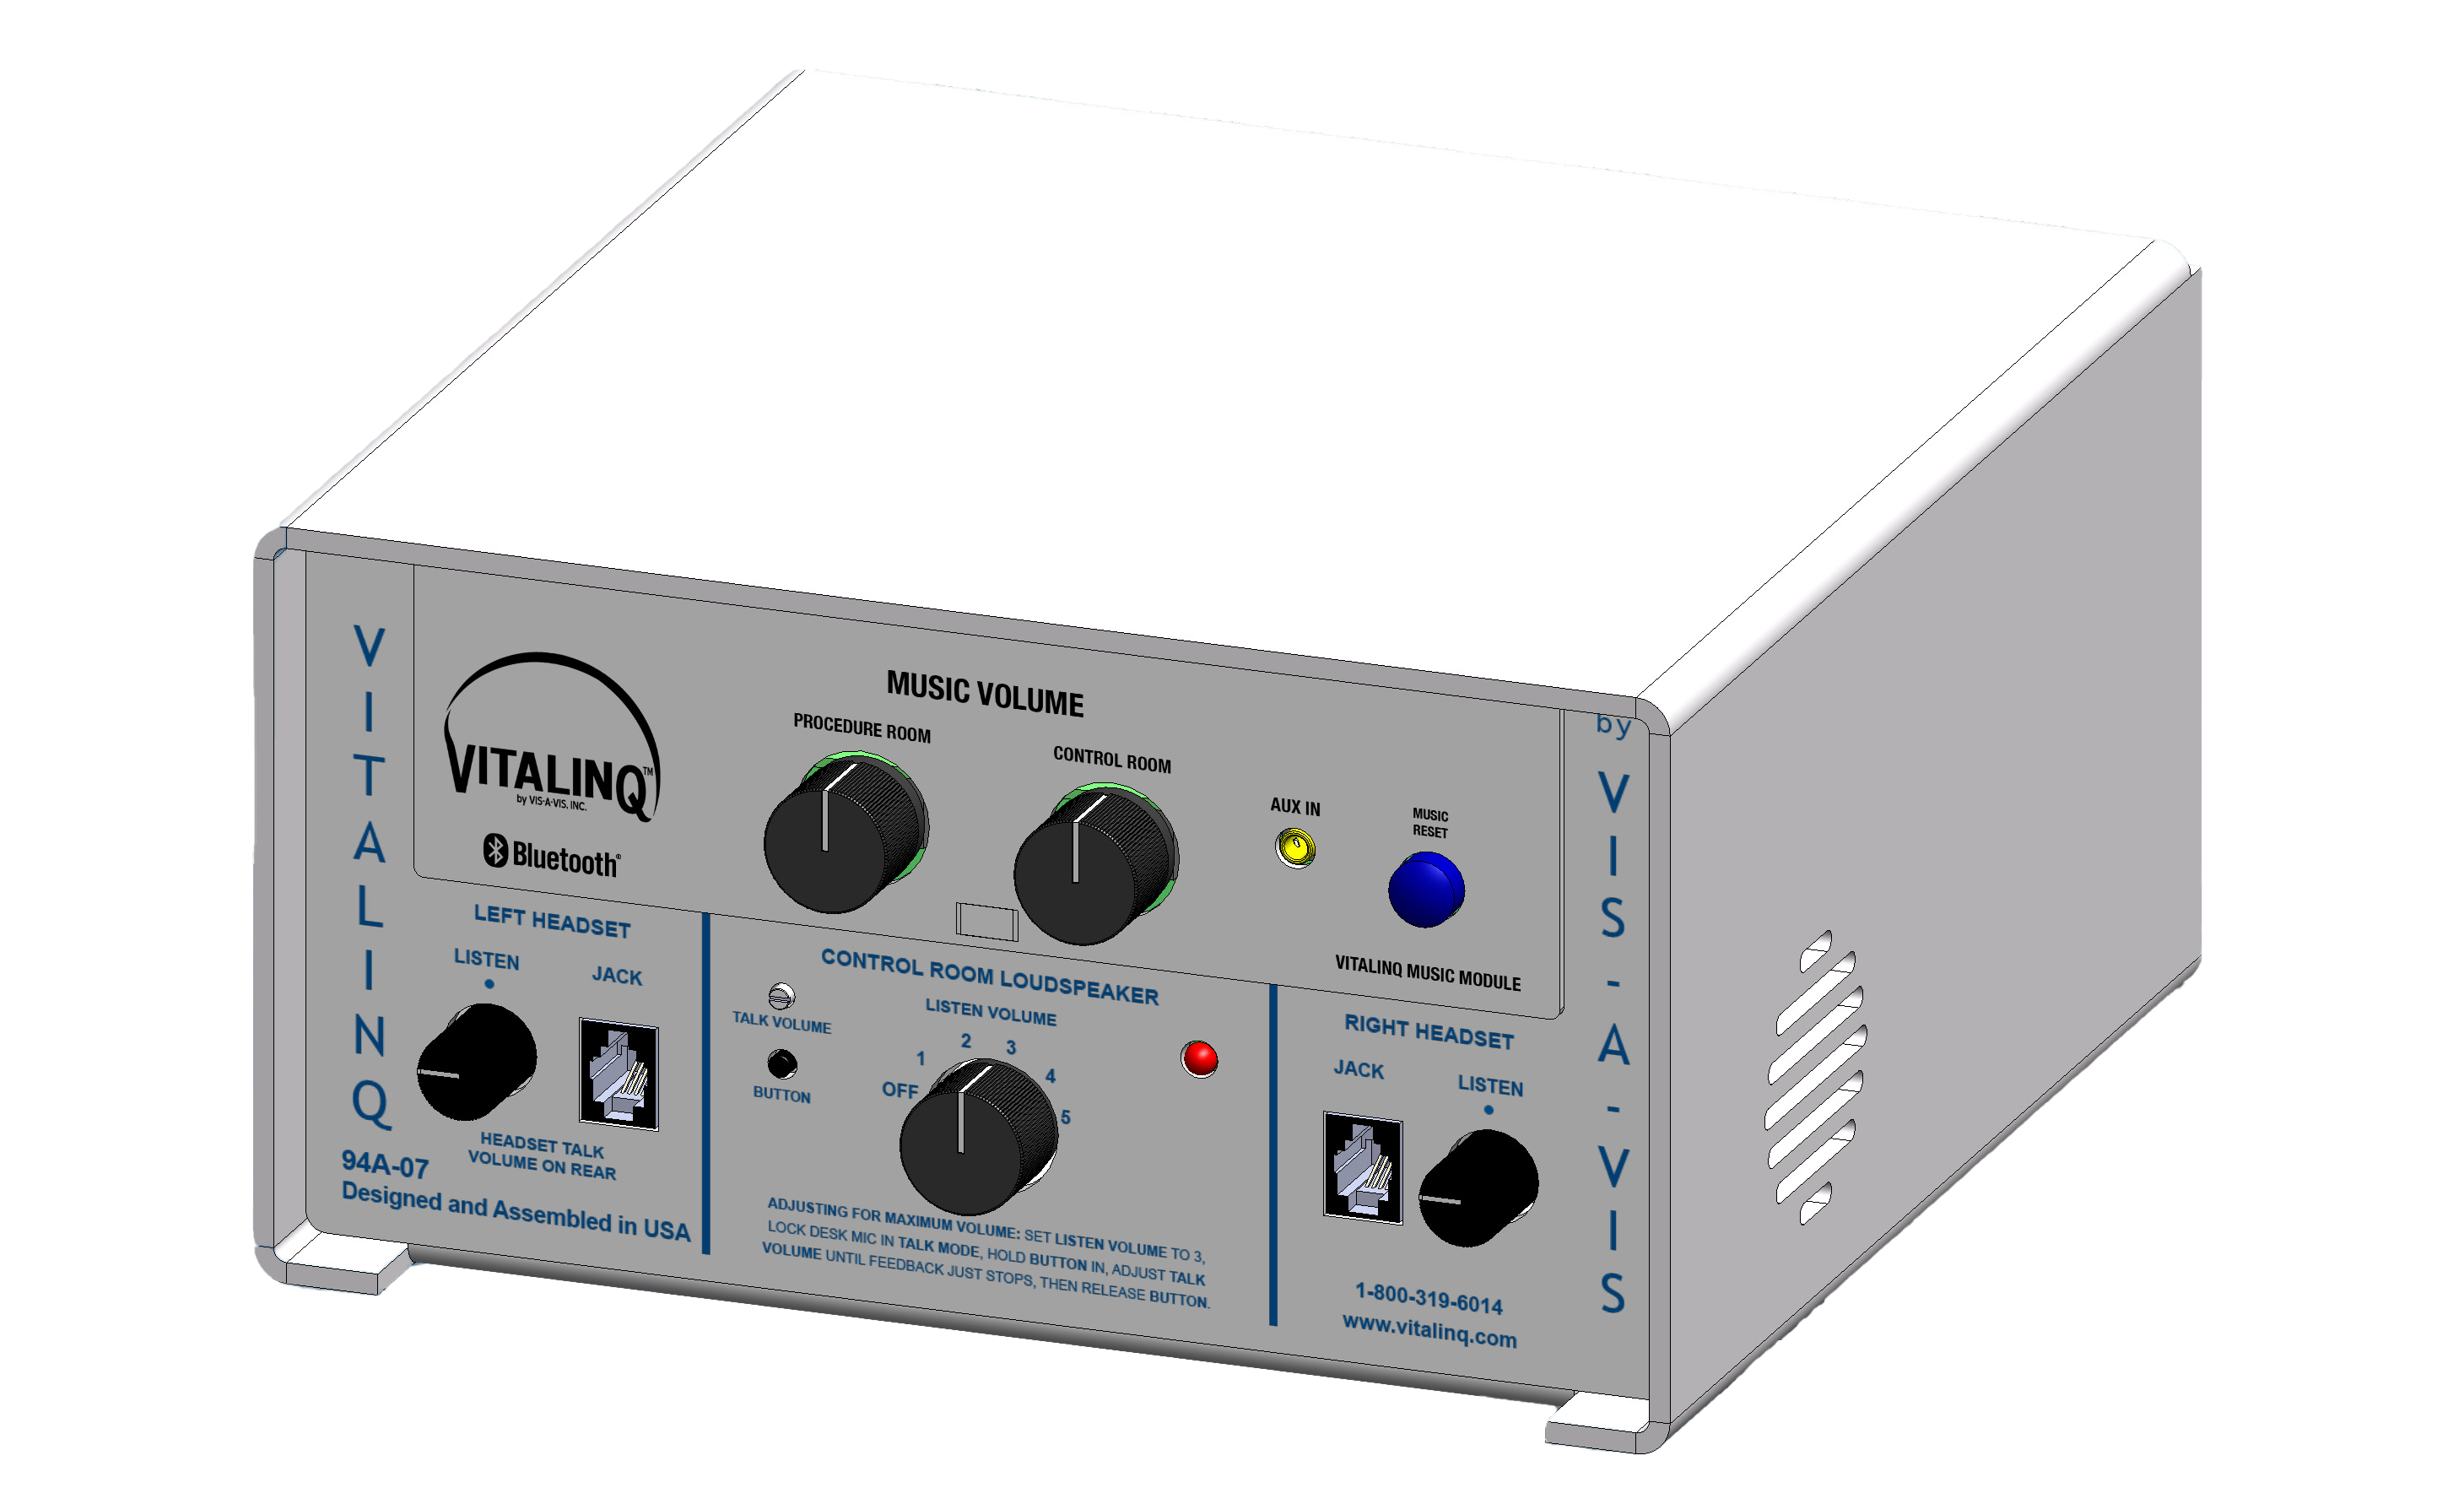 Vitalinq Model 94A-07 Cath Lab intercom and music module